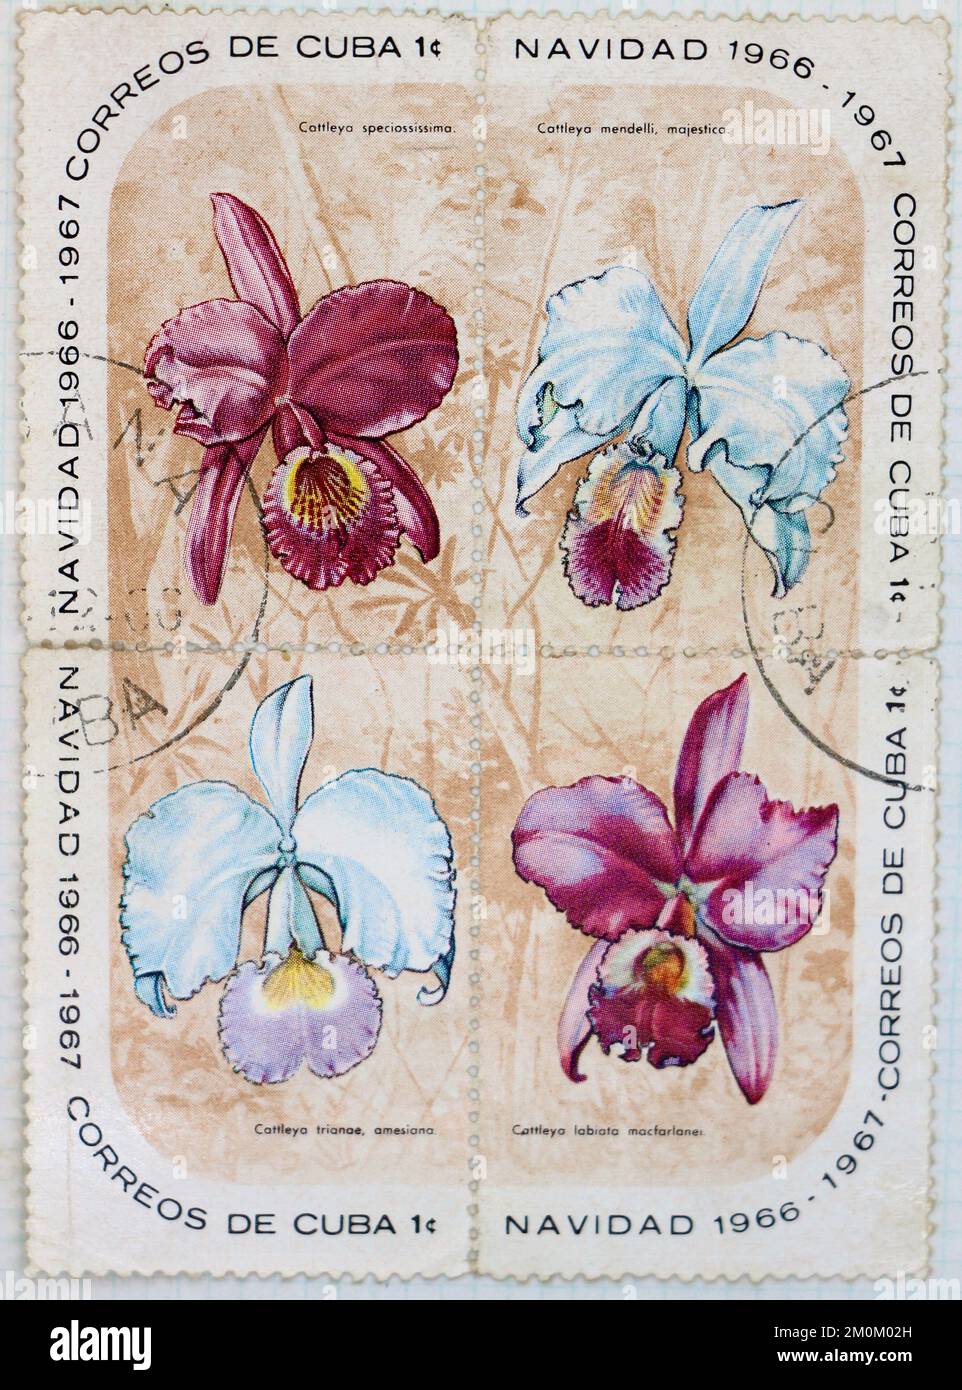 Foto 4 francobolli cubani Uniti Orchidee Cattleya speciosissima Cattleya mendelii majestica Cattleya trianae ameseiana Cattleya labiata macfarlanei Foto Stock